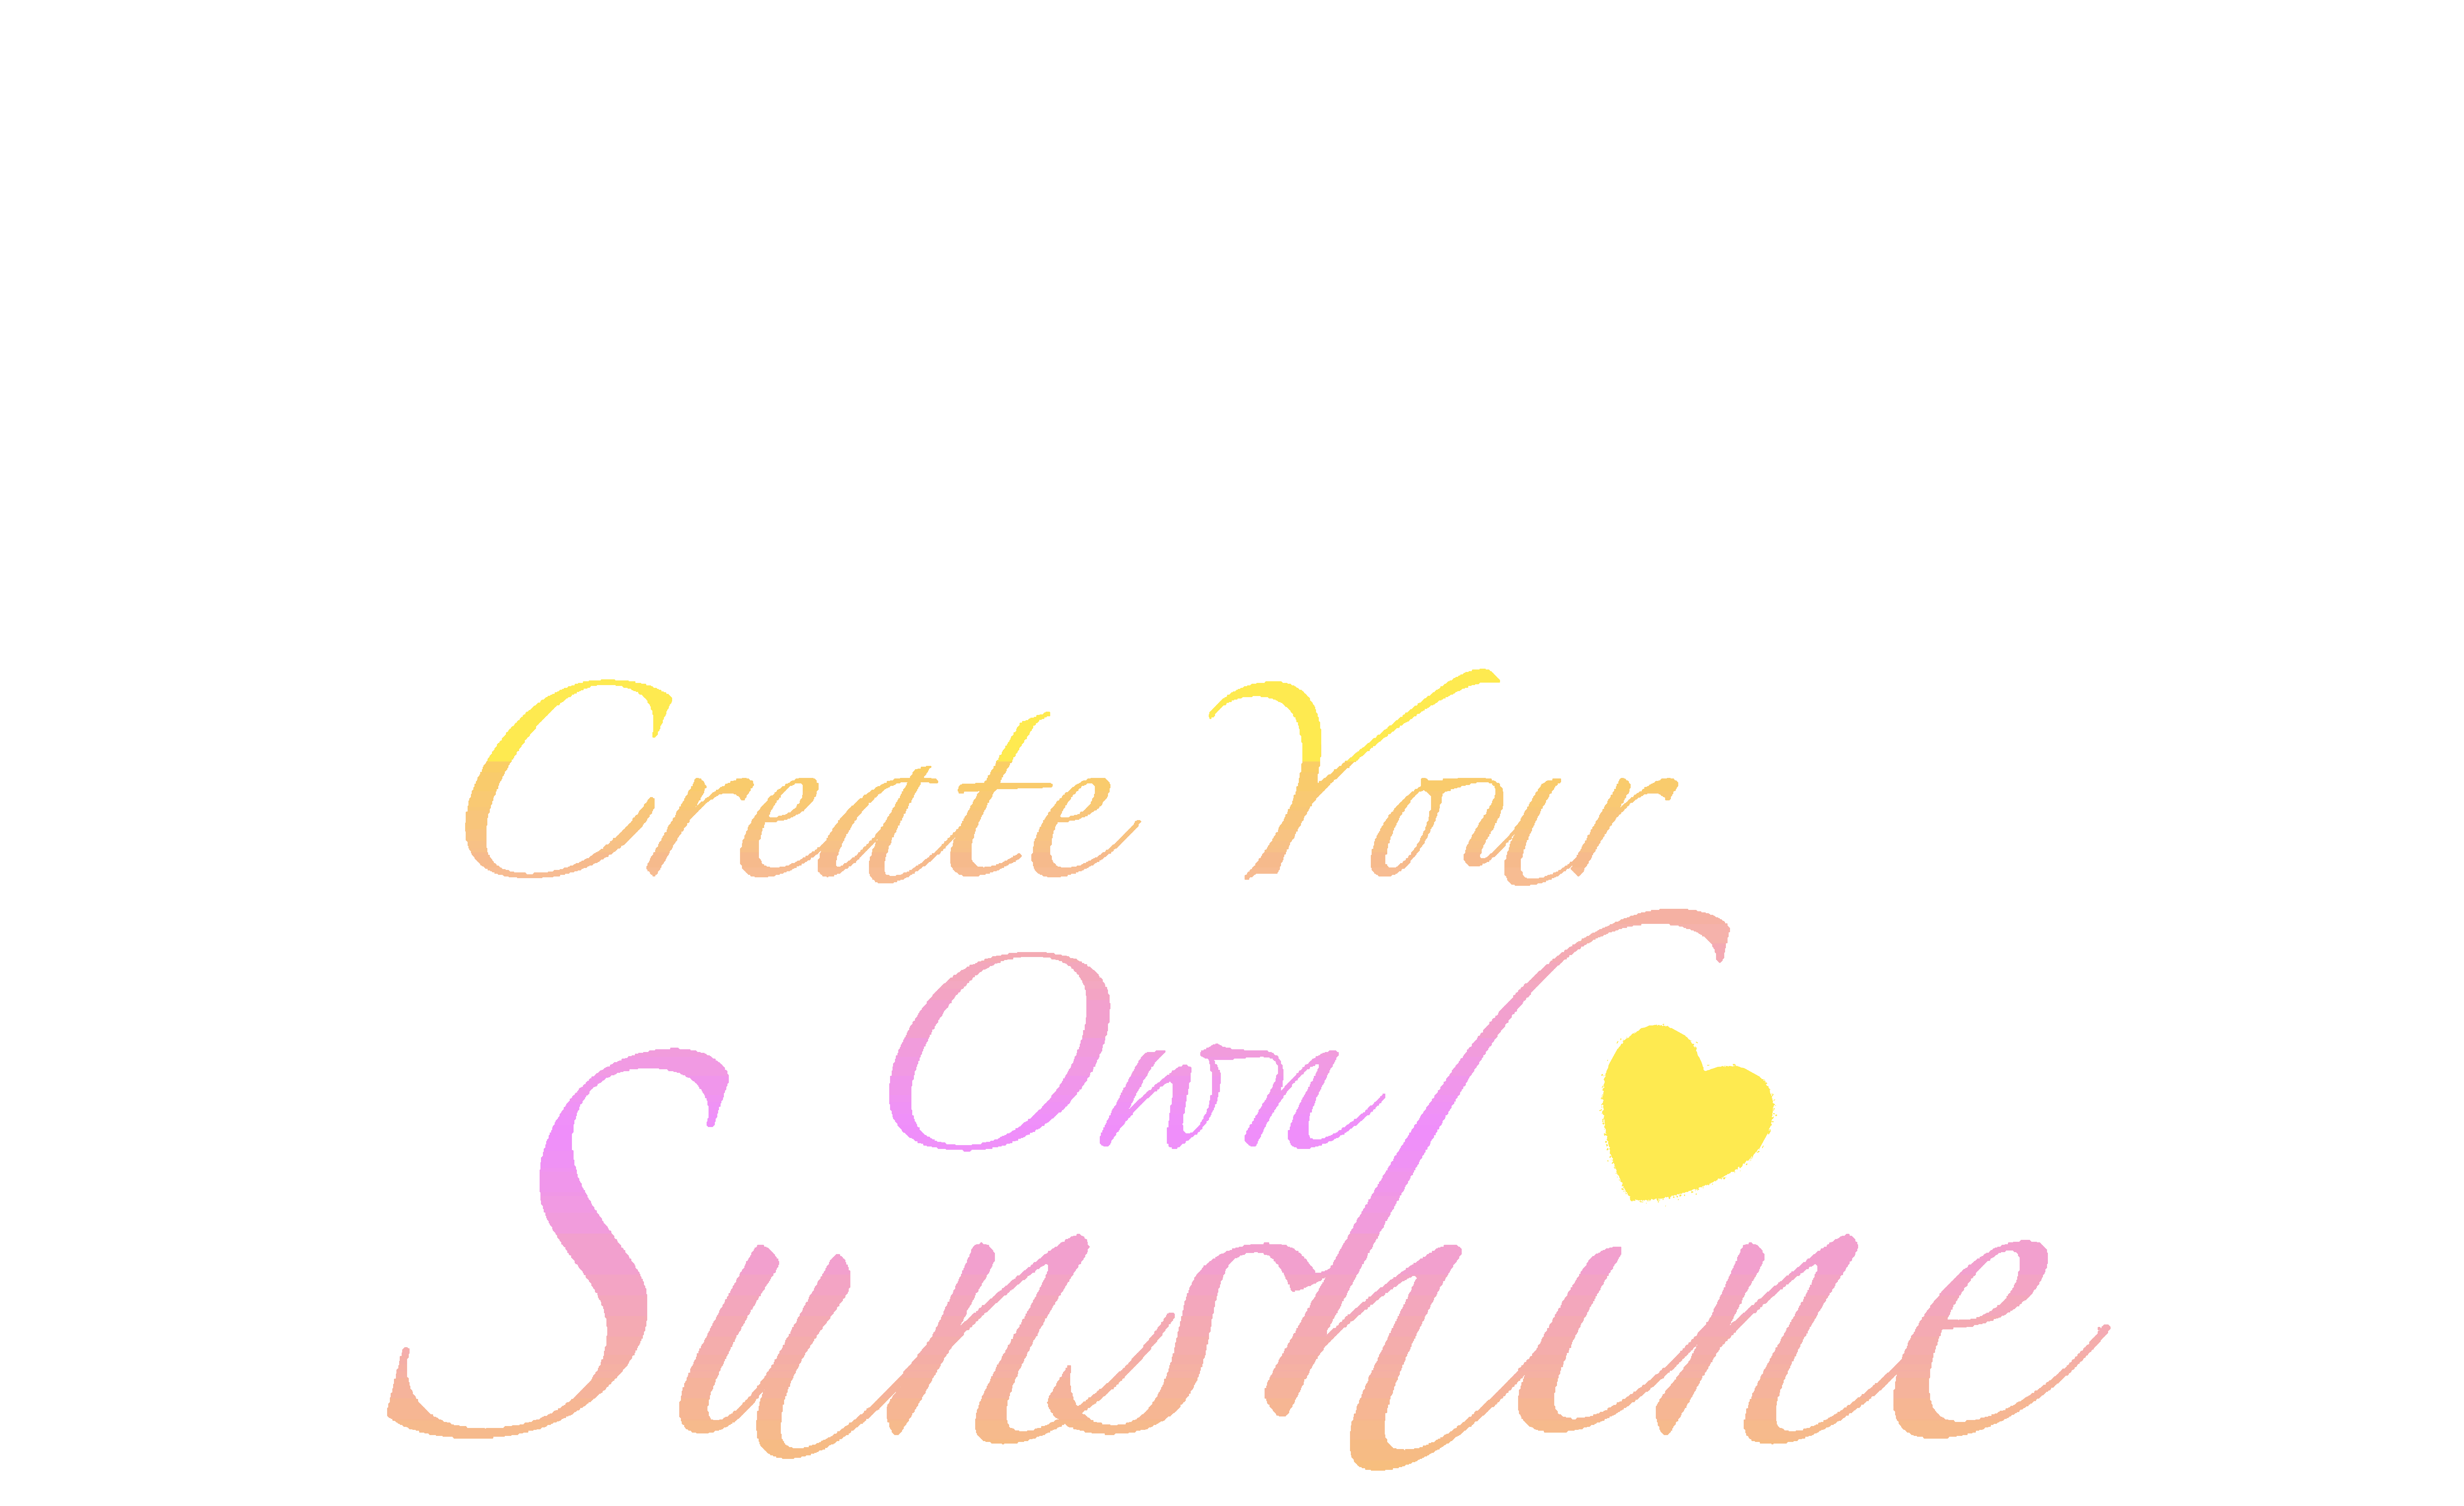 Create your own sunshine